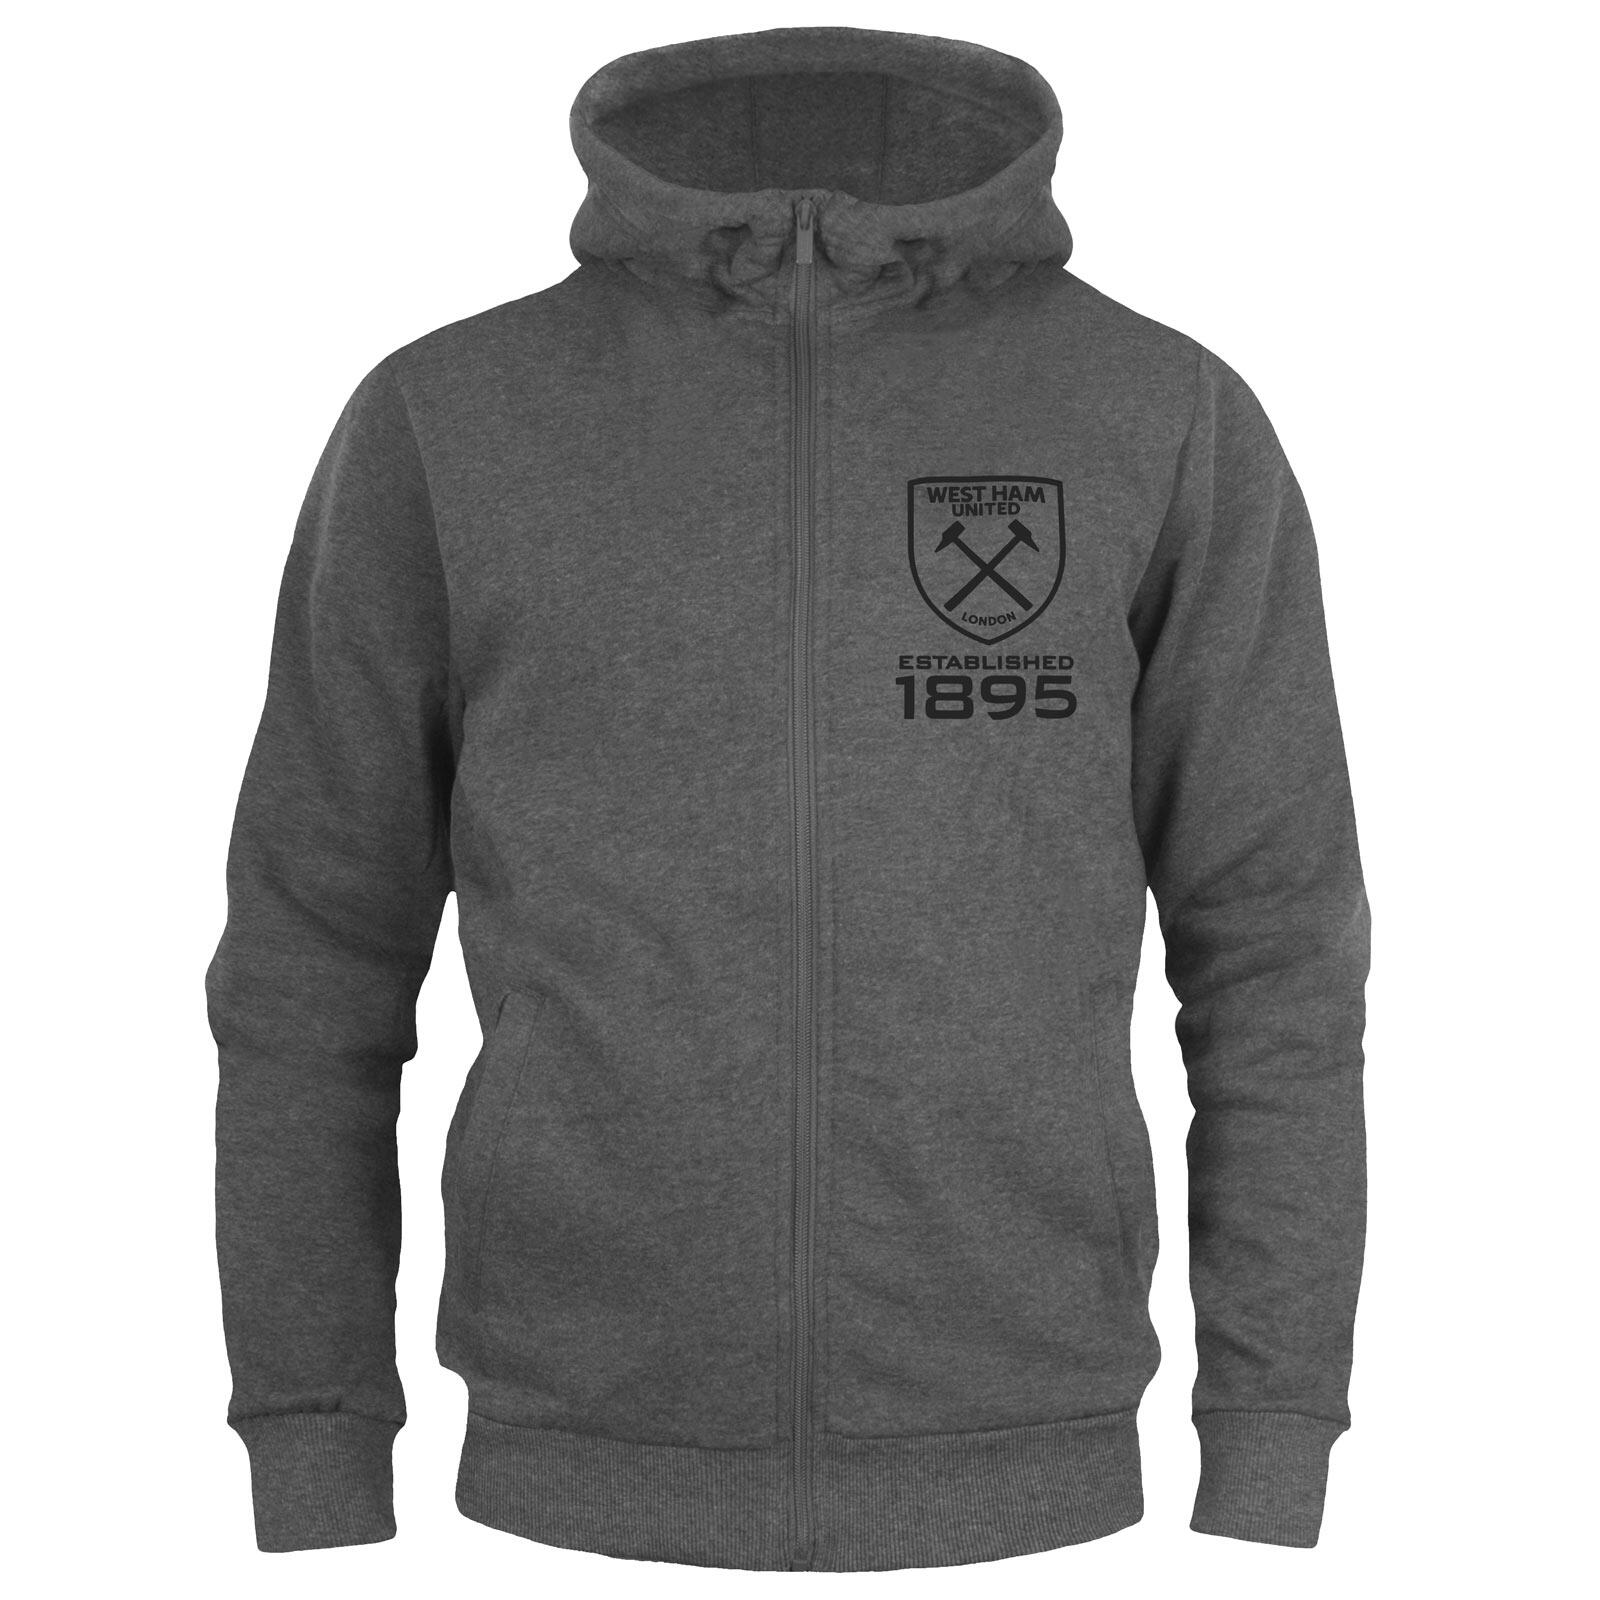 WEST HAM UNITED West Ham United Boys Hoody Zip Fleece Kids OFFICIAL Football Gift